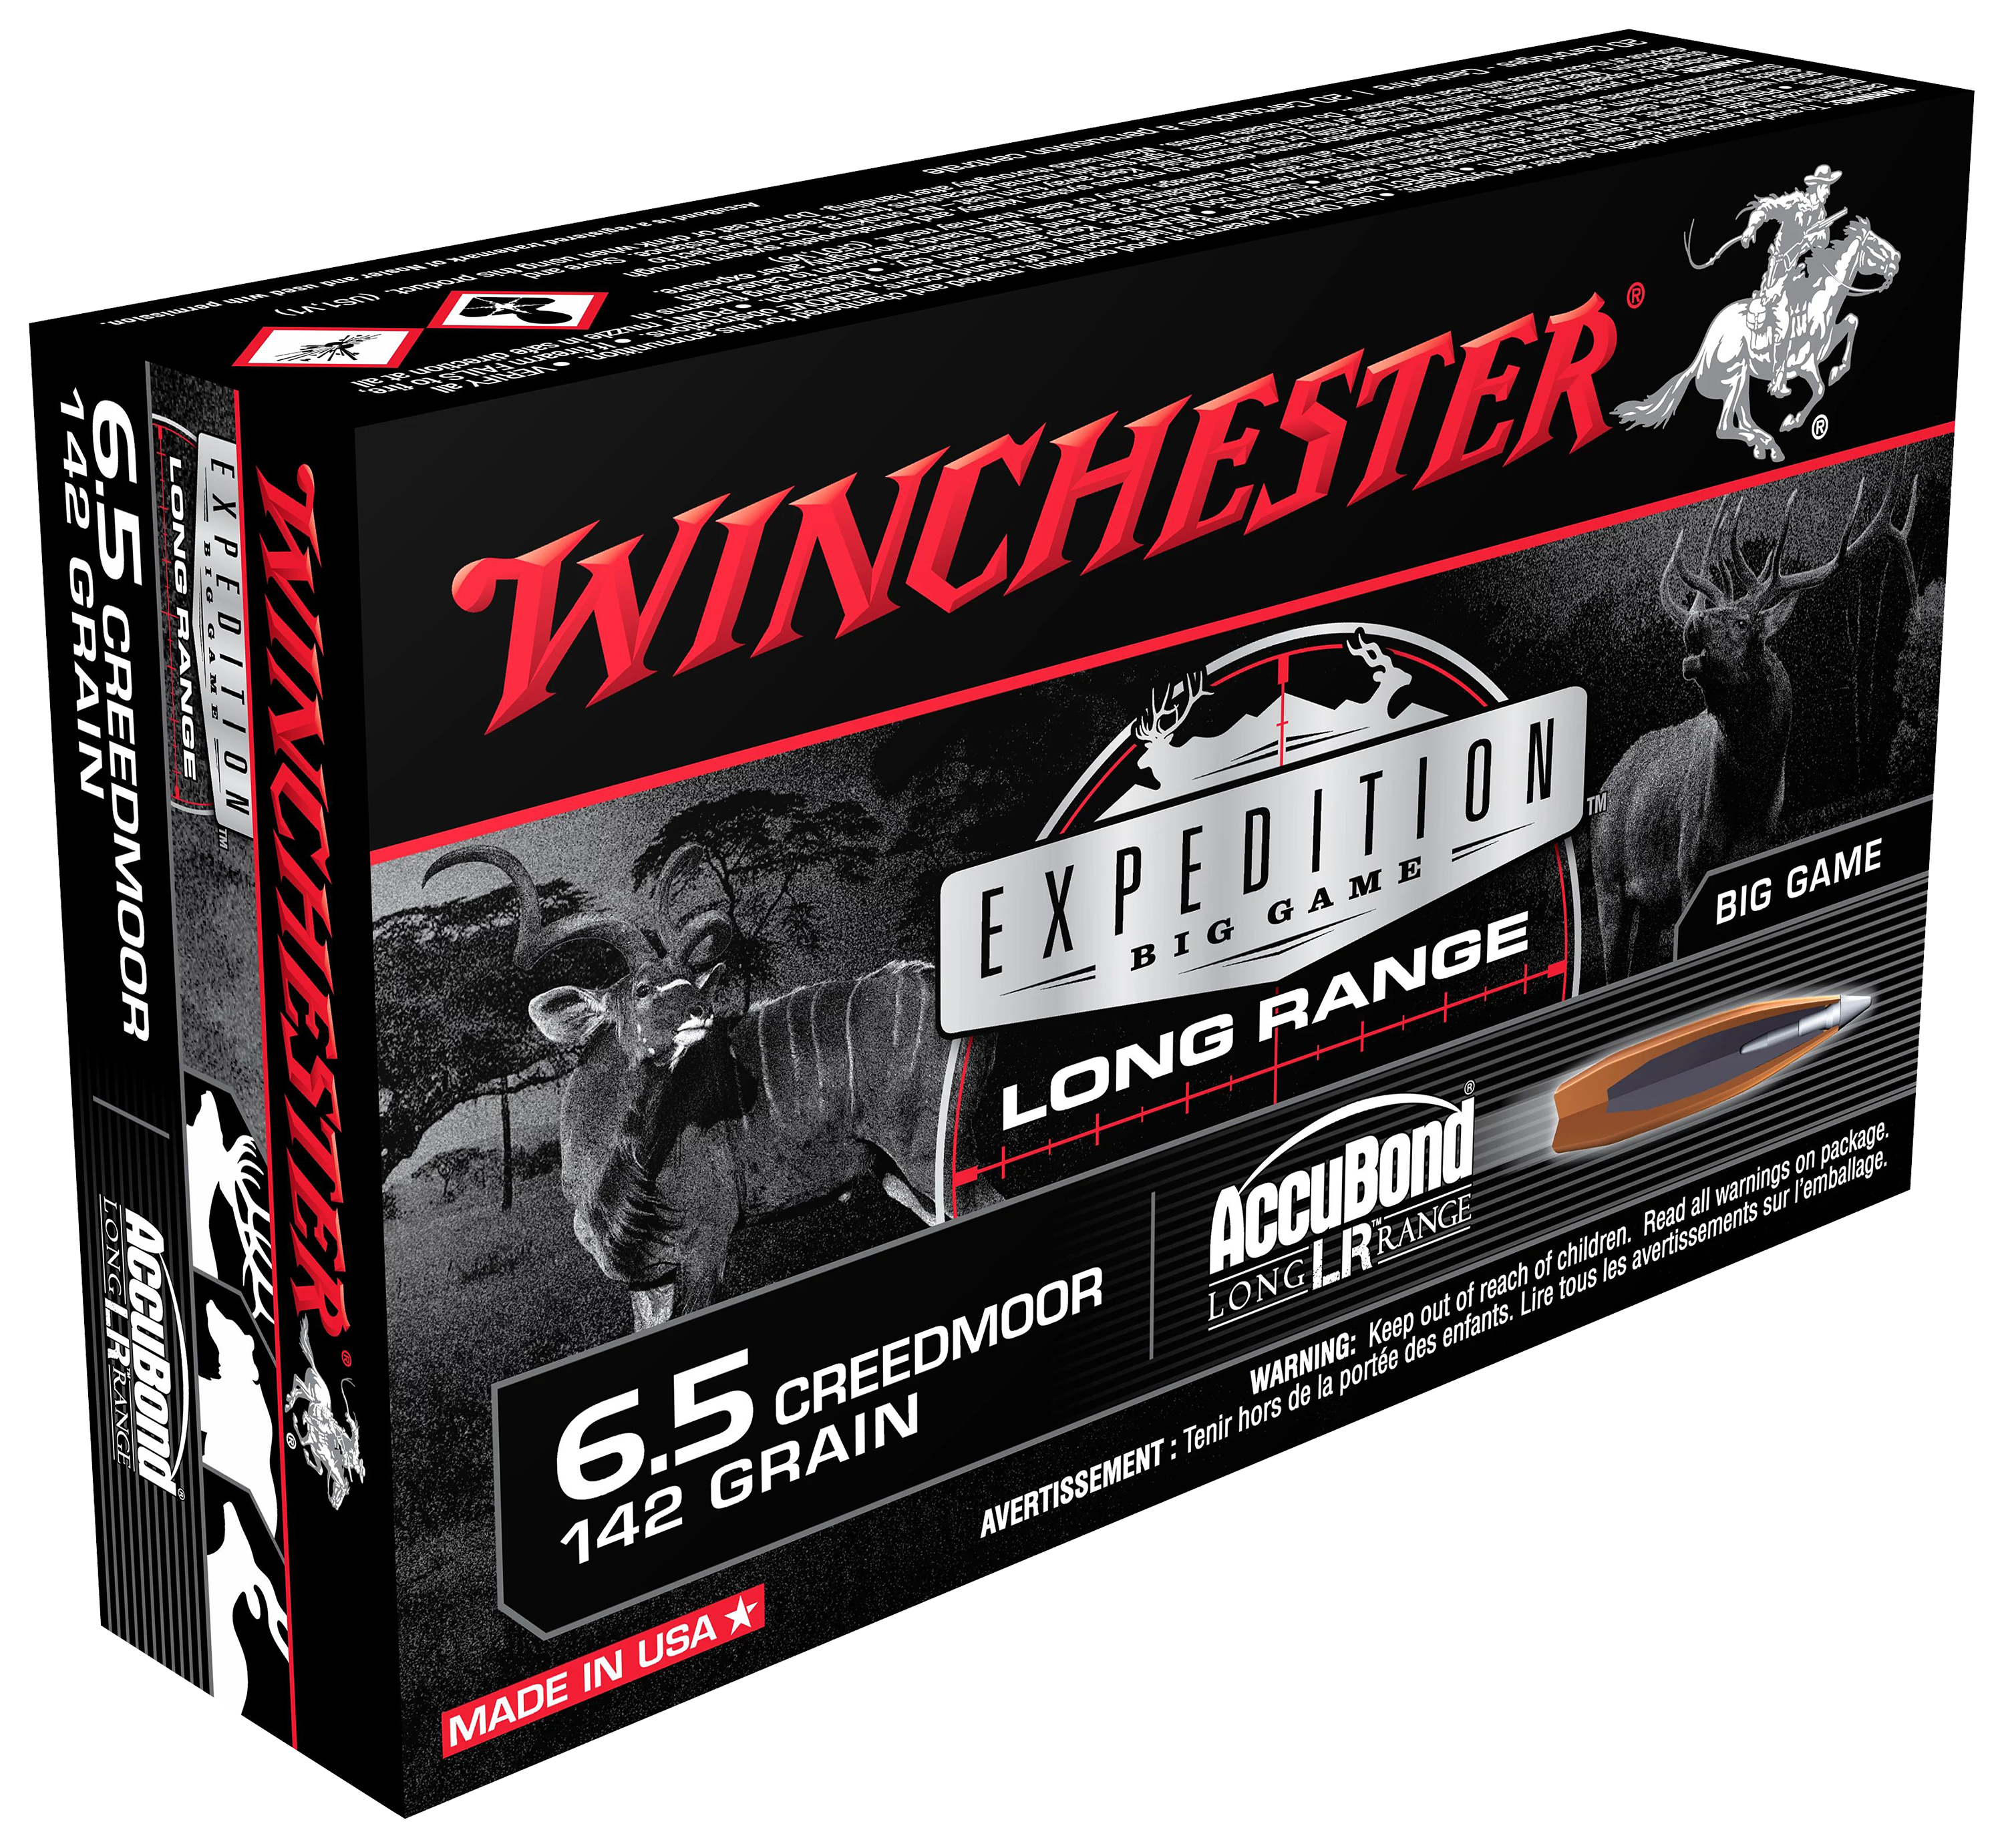 Winchester Expedition Big Game Long Range 6.5 Creedmoor 142 Grain AccuBond LR Centerfire Rifle Ammo